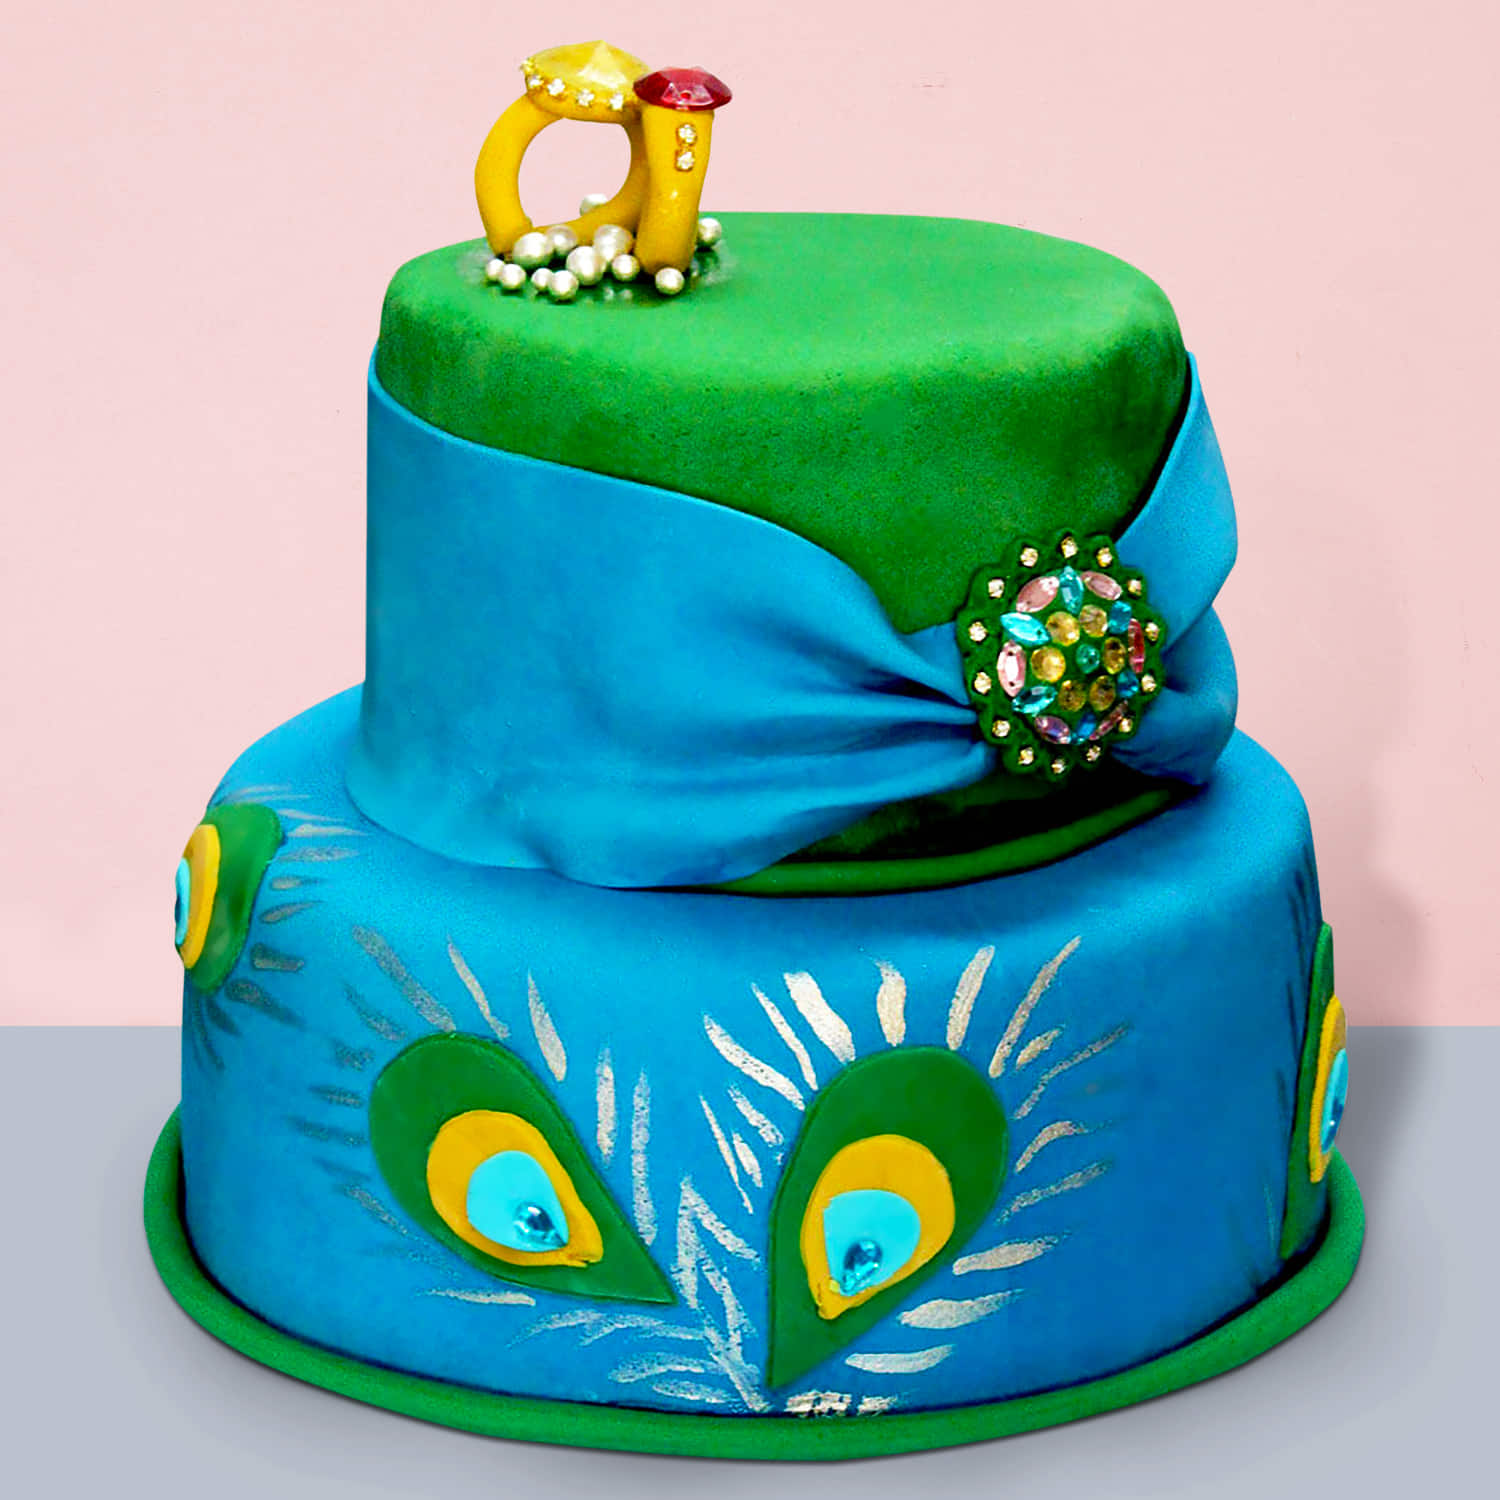 Janmashtami cake designs | Cake designs, Cake decorating tips, Cake  decorating techniques